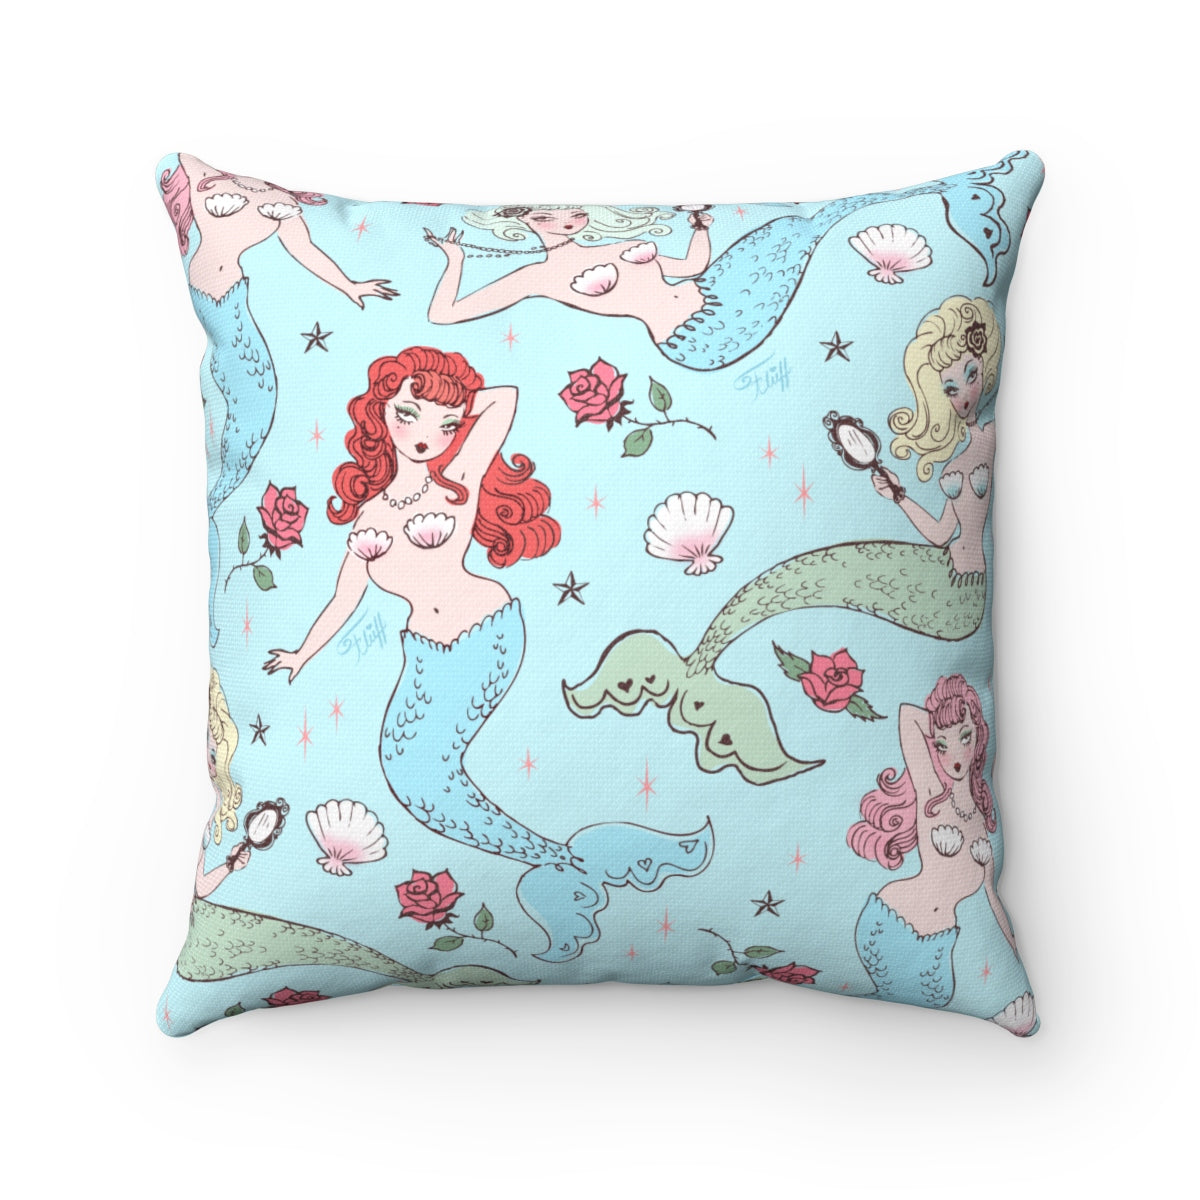 Mermaids and Roses on Aqua • Square Pillow